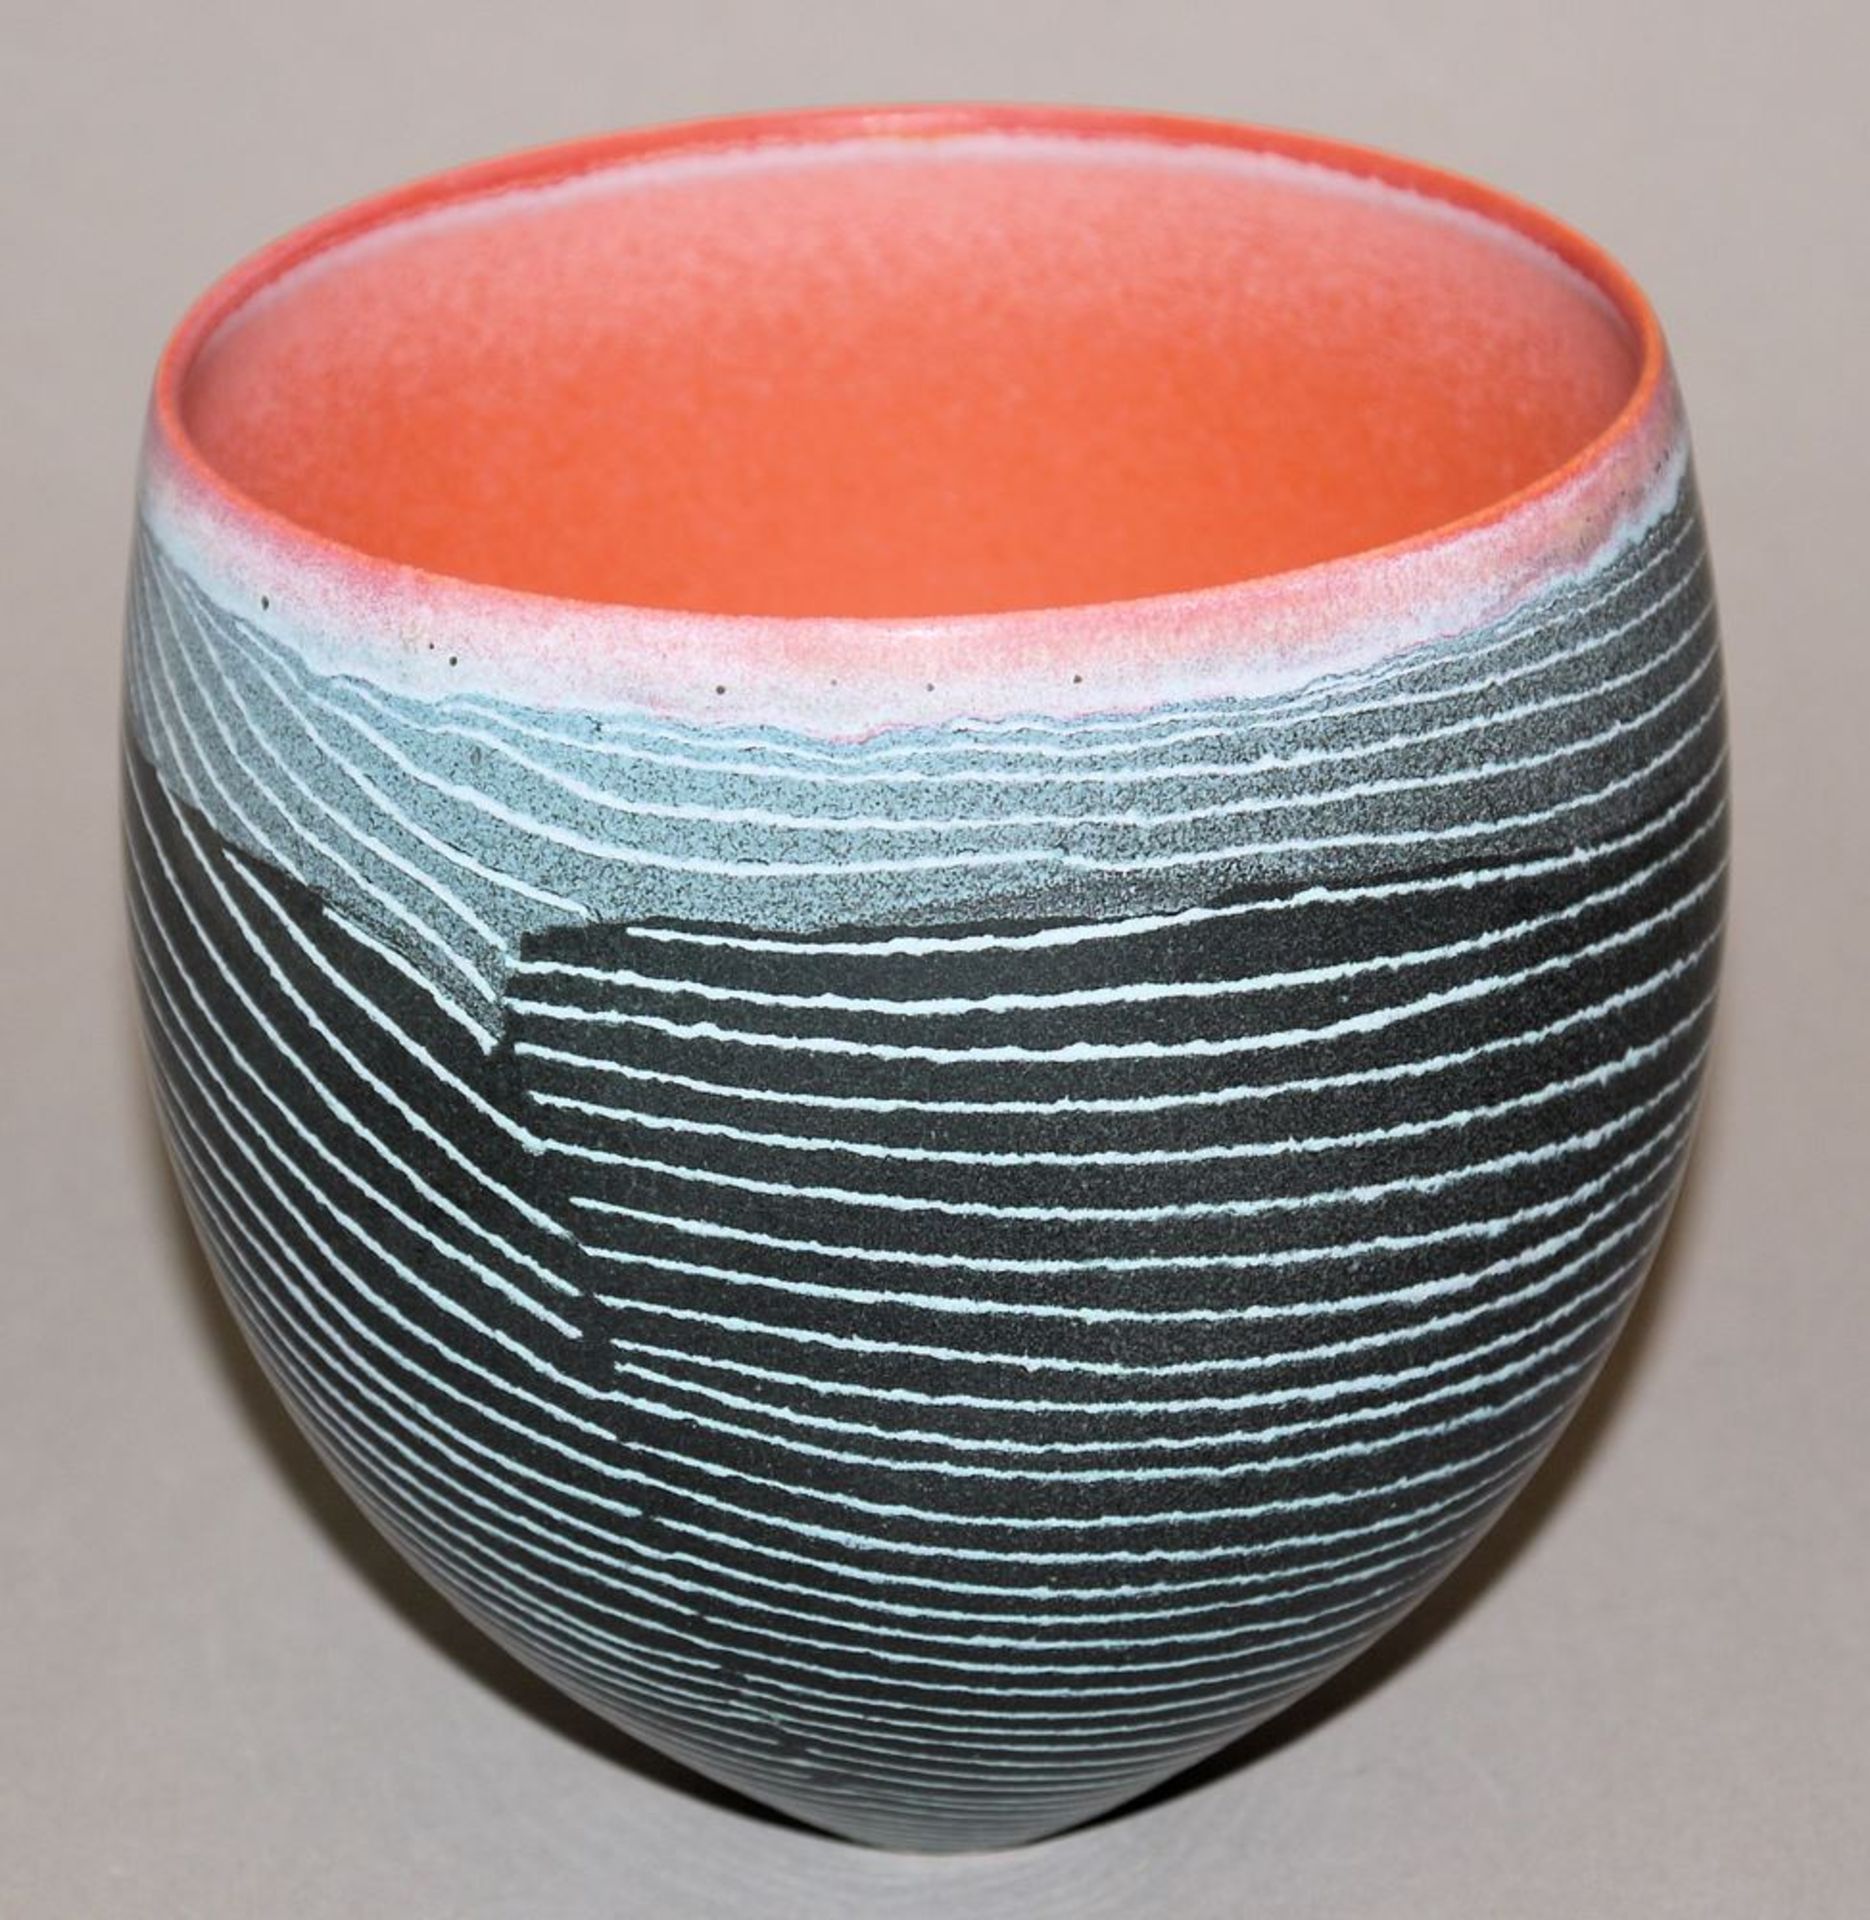 Pip Drysdale, Keramikvase der Serie "Tanami Traces", Australien XX./XXI.